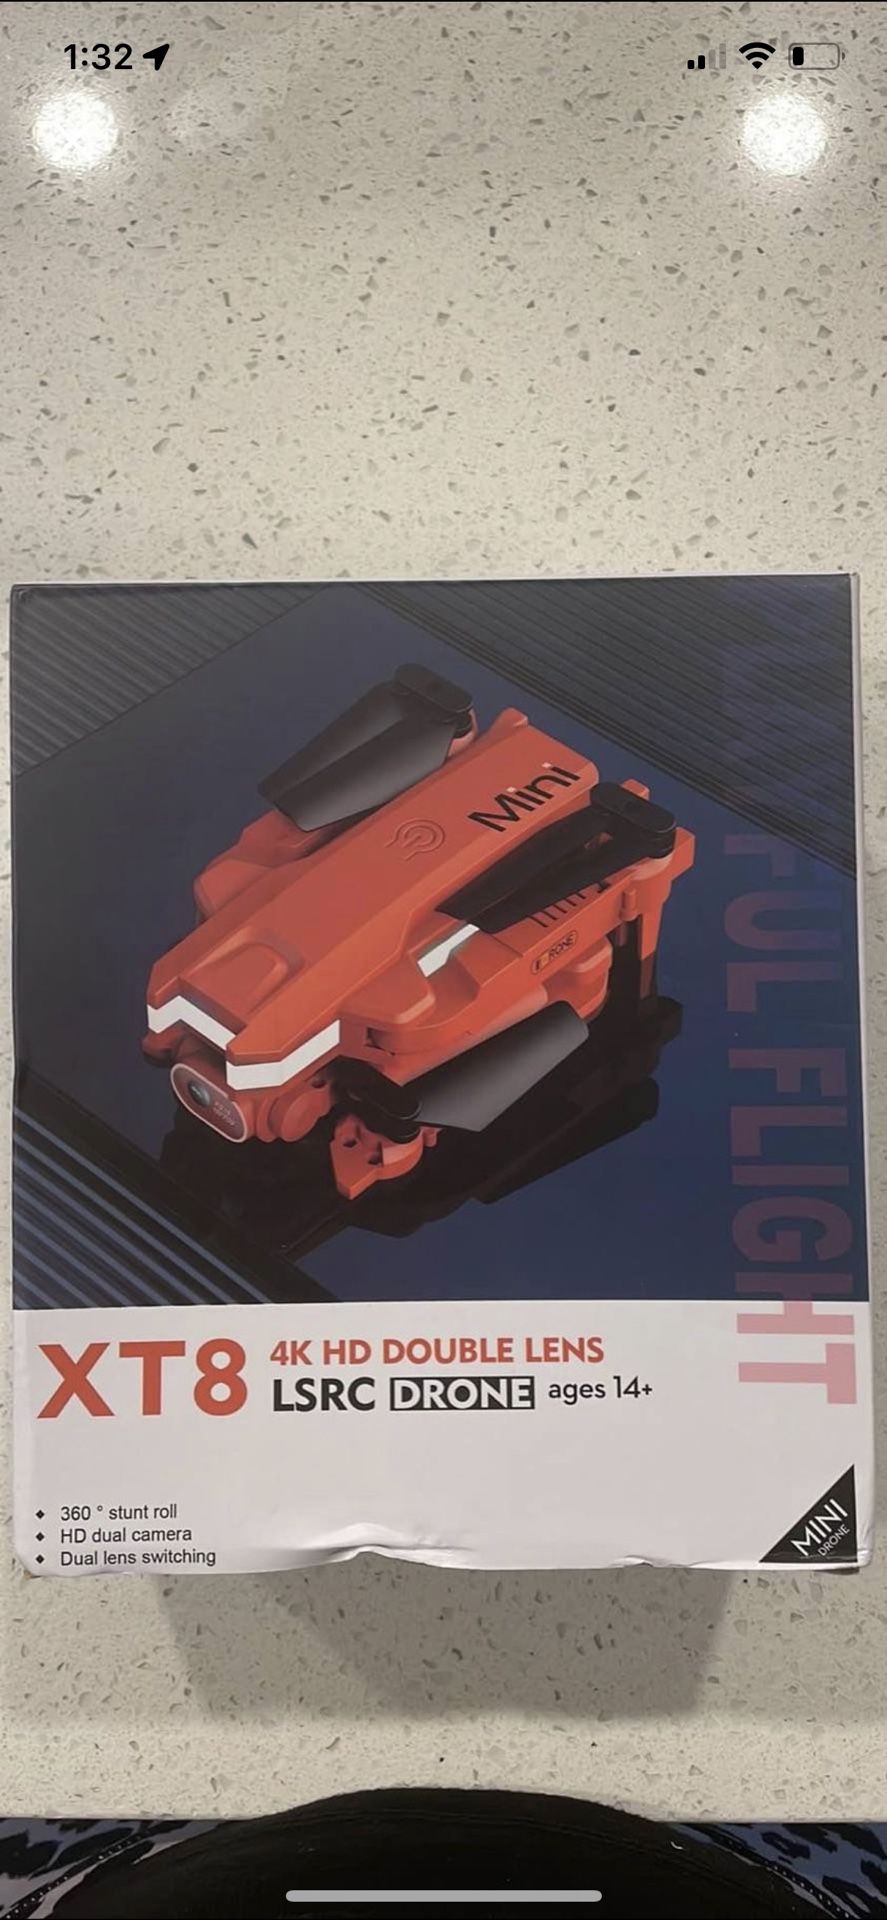 XT8 4k HD DOUBLE LENS MINI DRONE AGE 14+